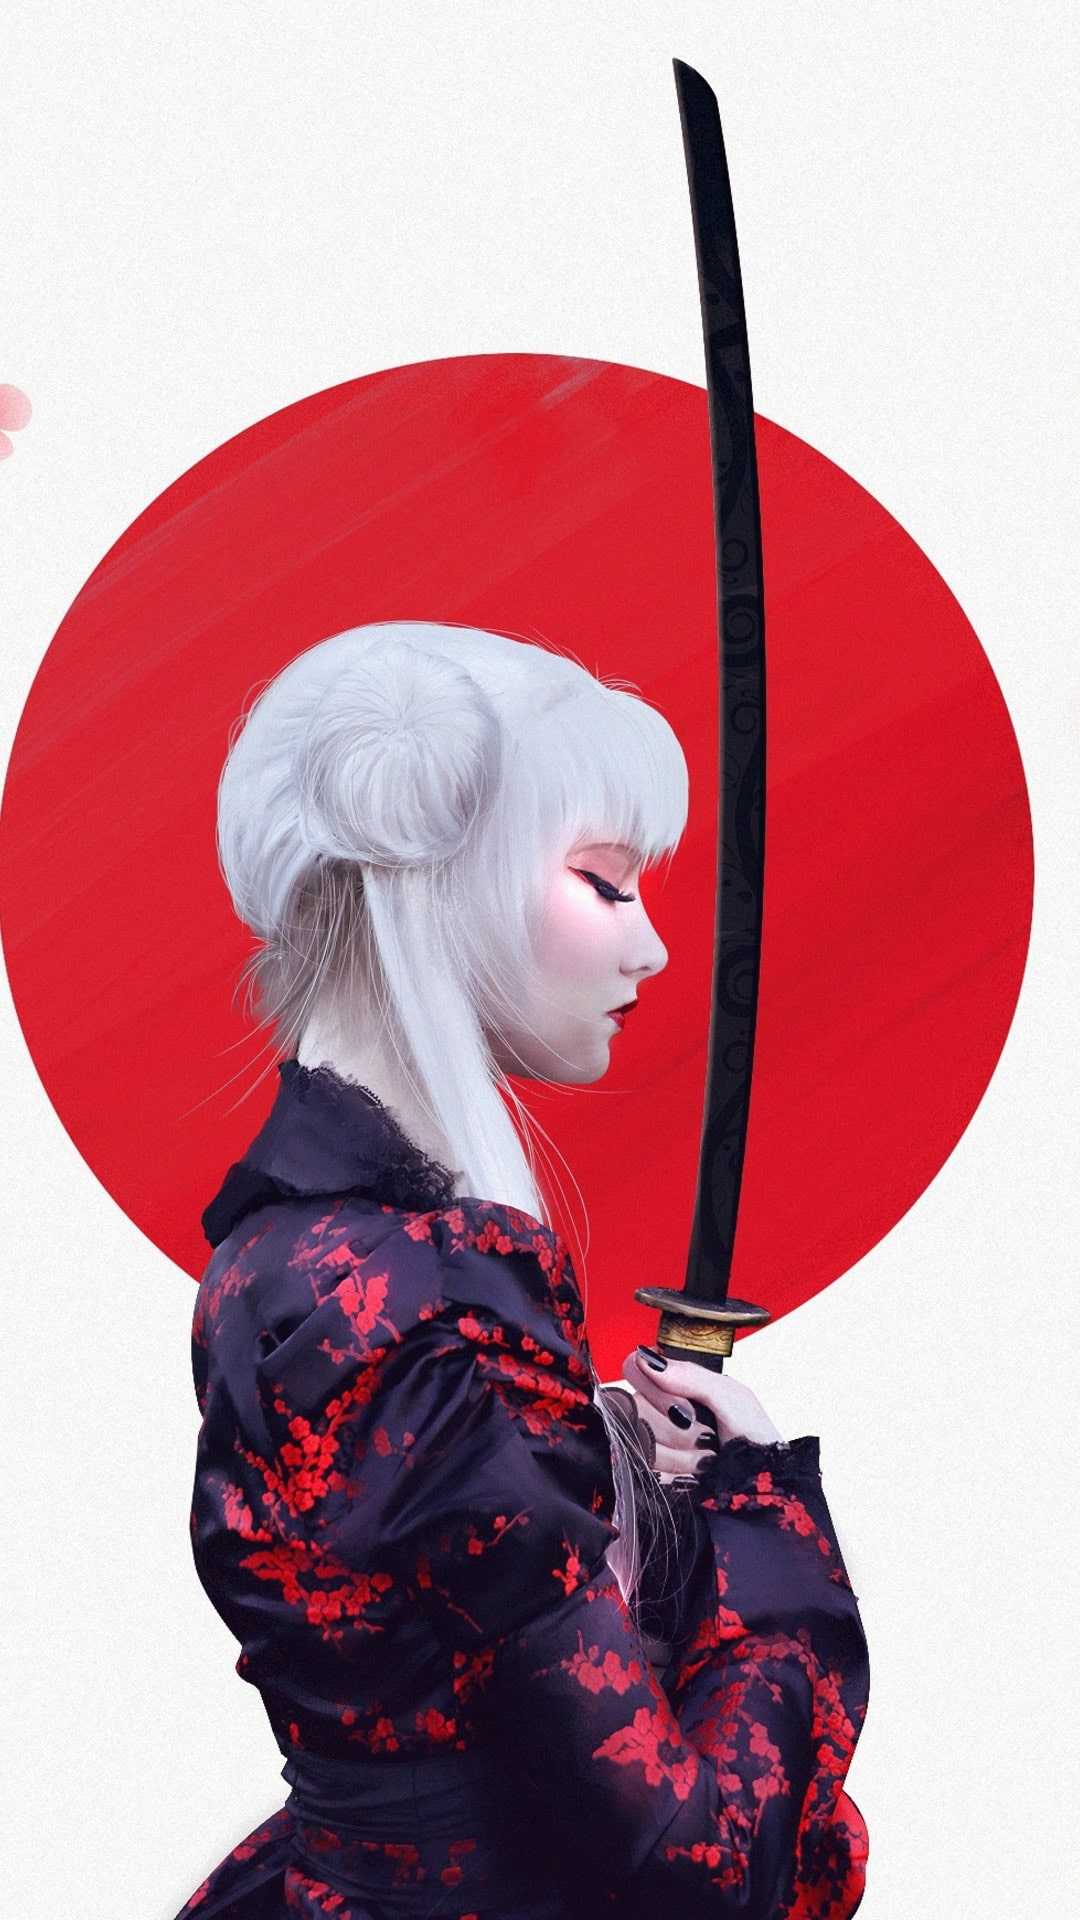 Samurai Girl Wallpapers